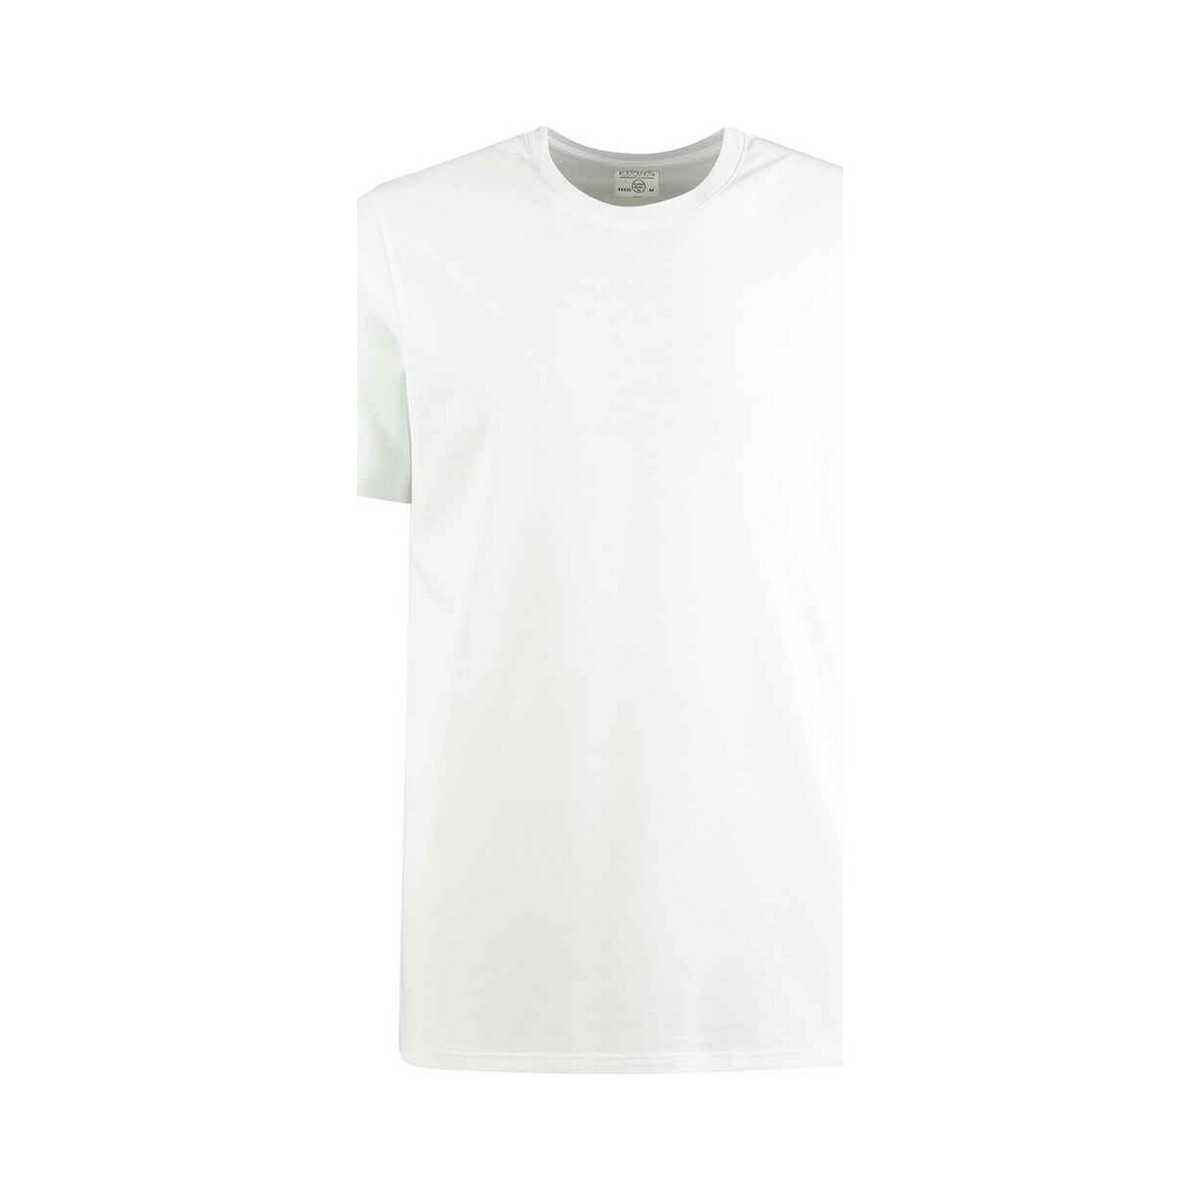 textil Hombre Camisetas manga larga Kustom Kit K530 Blanco